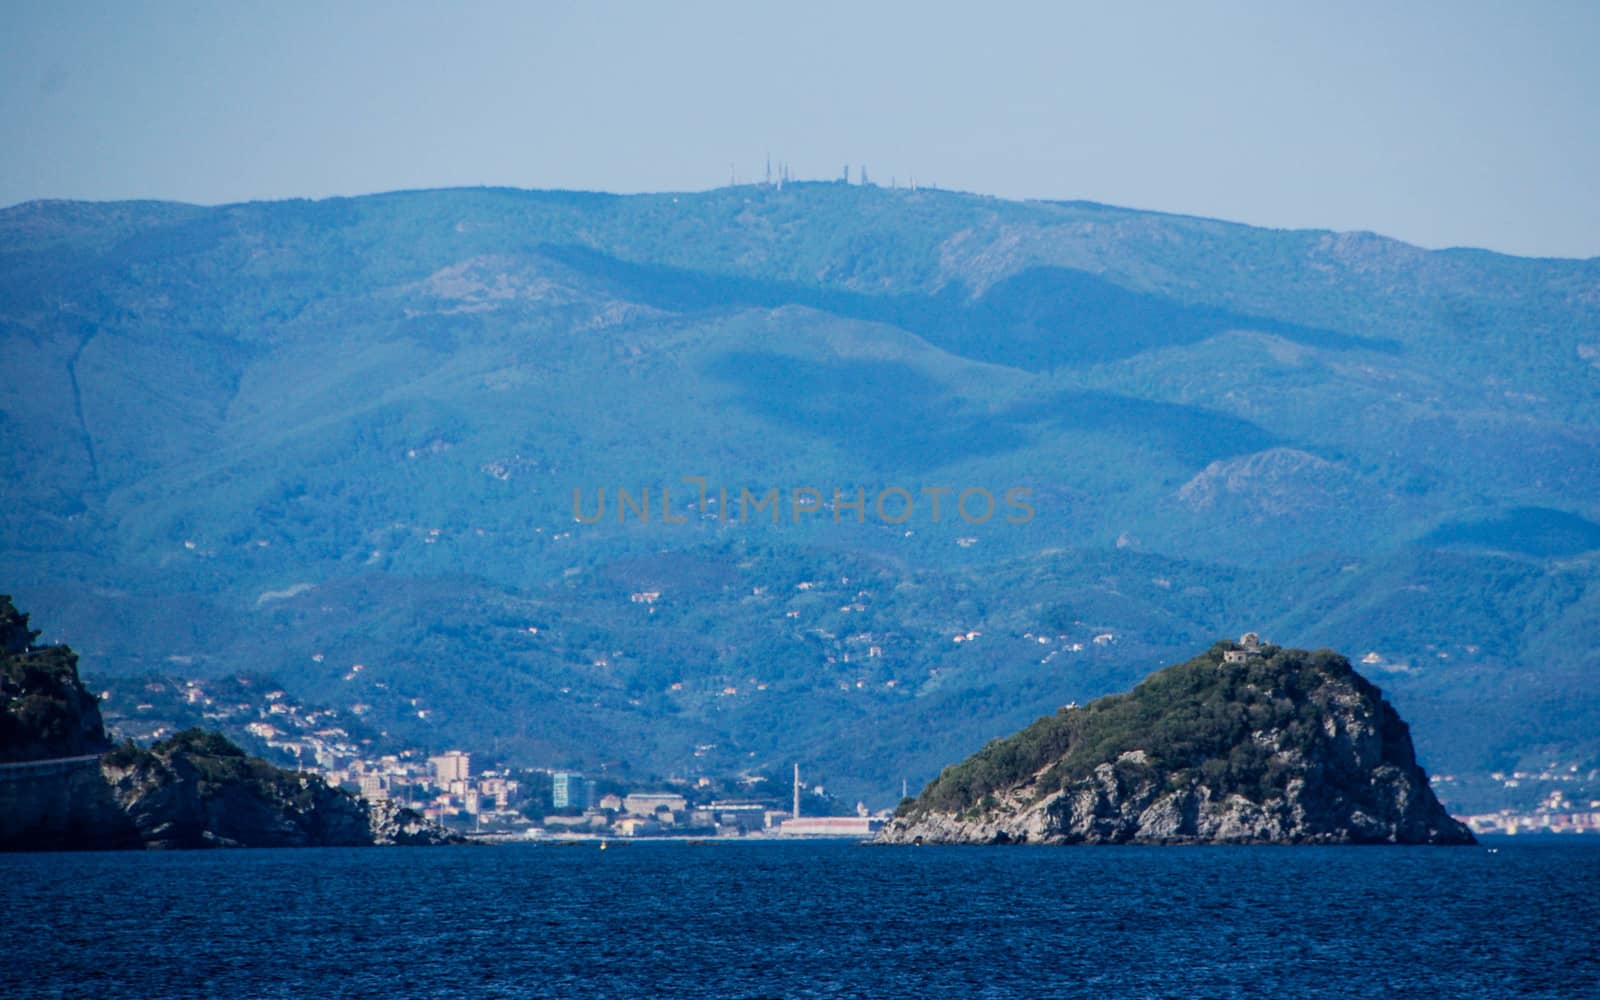 View of the island of Bergeggi in Liguria - Italy